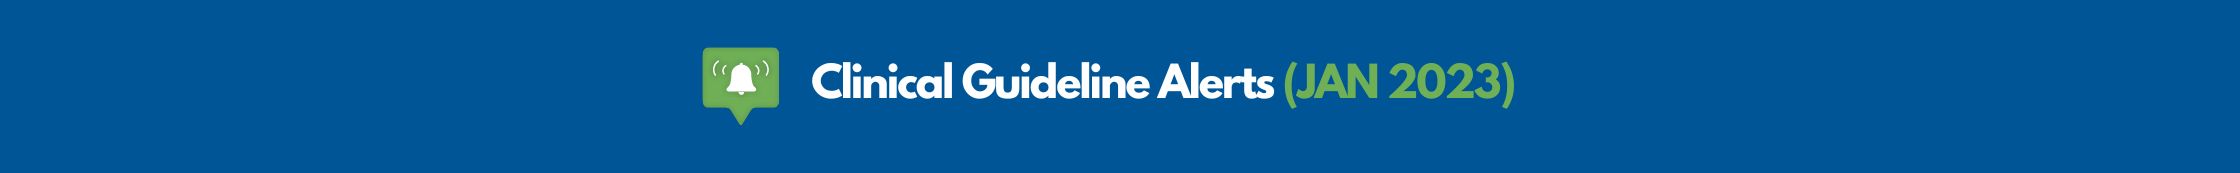 Clinical Guideline Alerts Banner Image